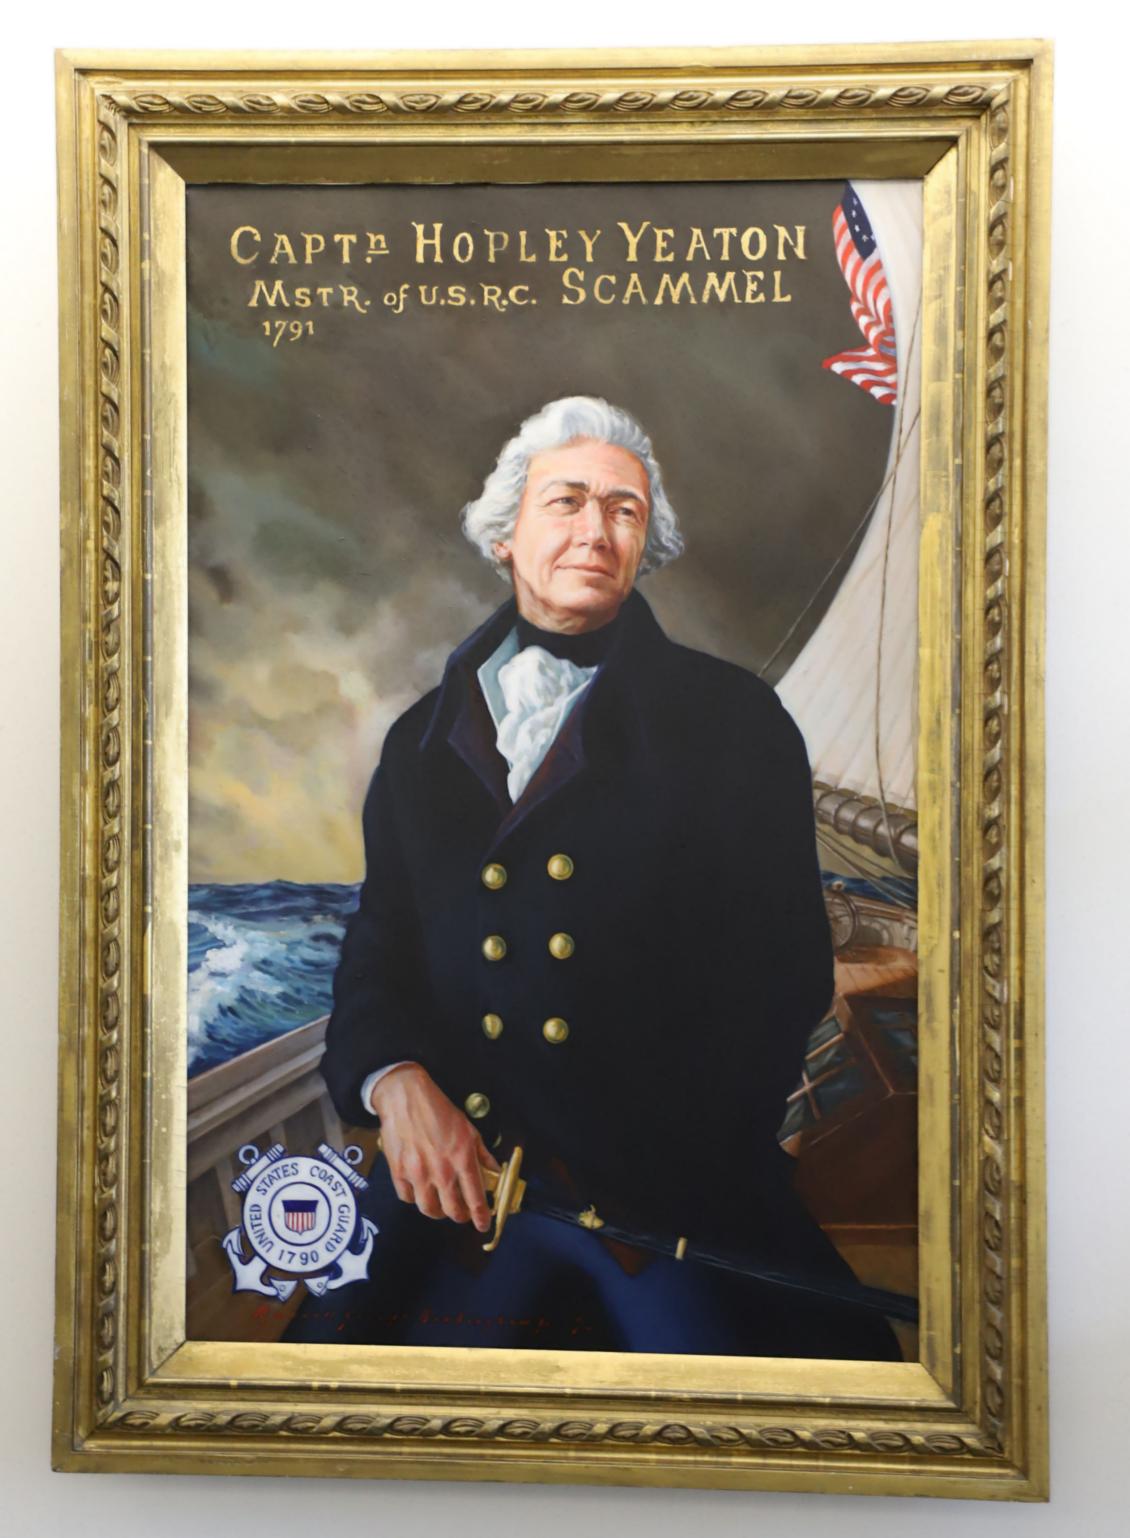 Hopley Yeaton Portrait - Coast Guard Academy